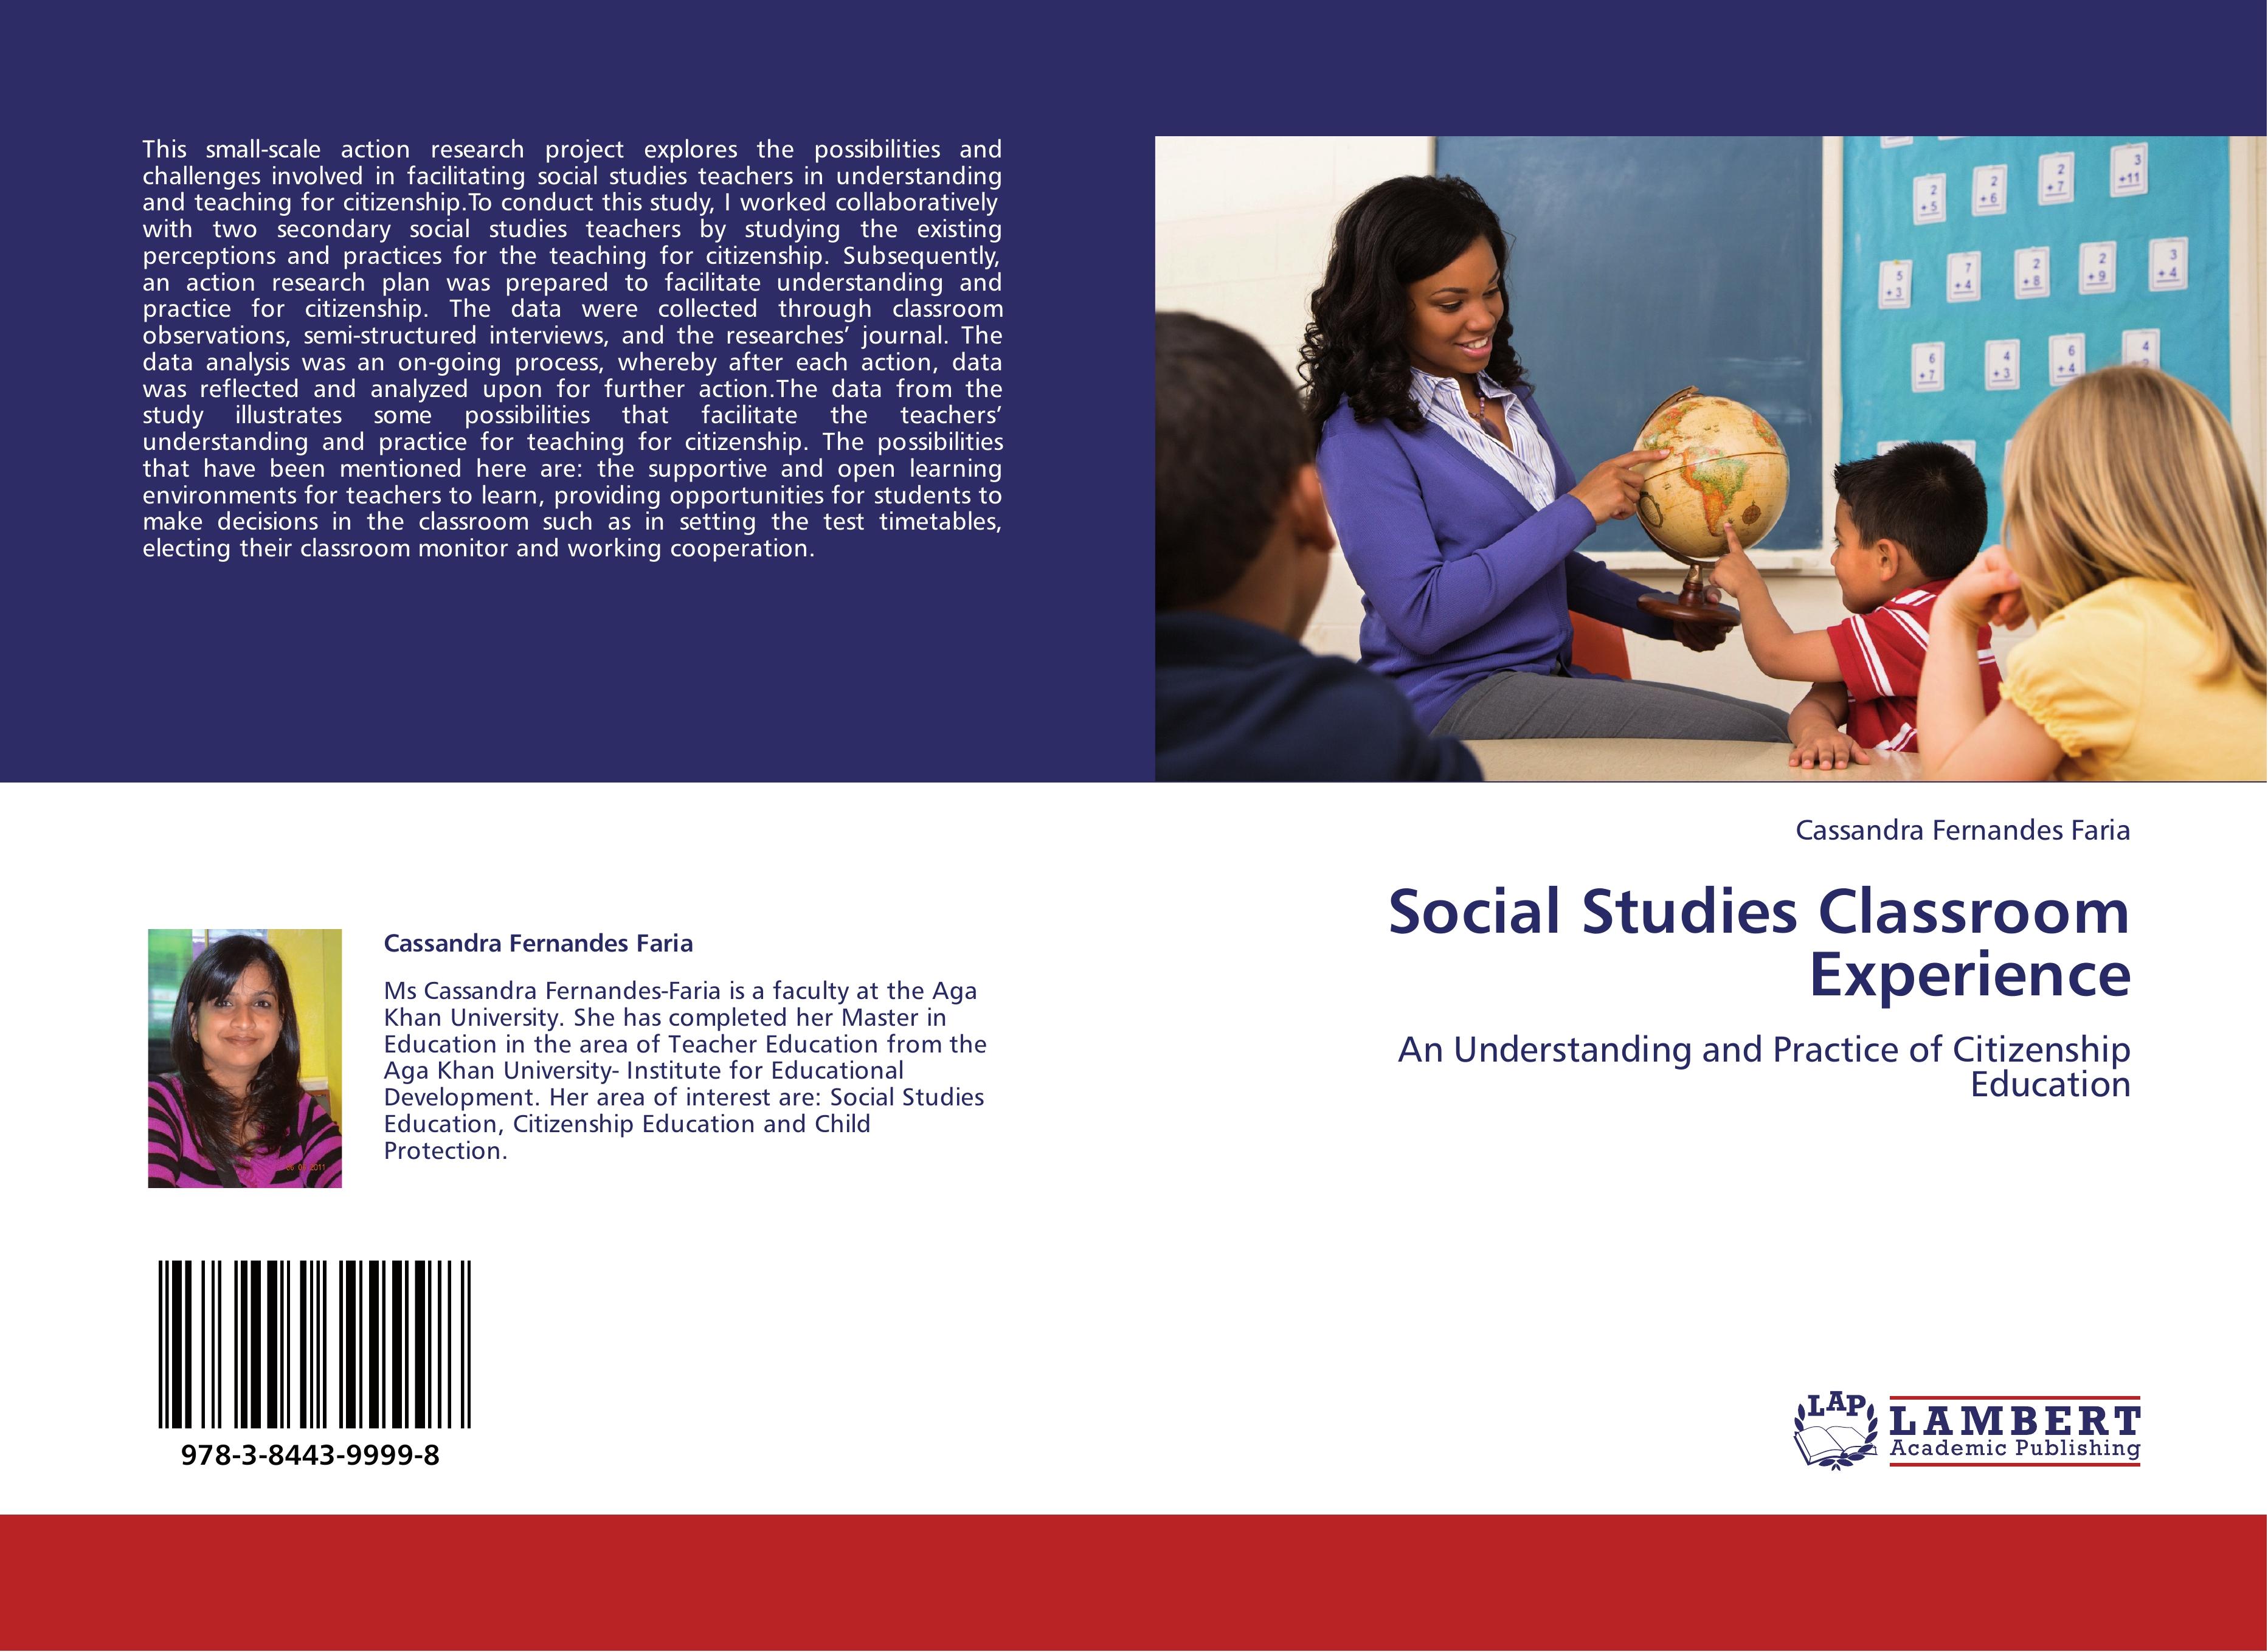 Social Studies Classroom Experience - Cassandra Fernandes Faria